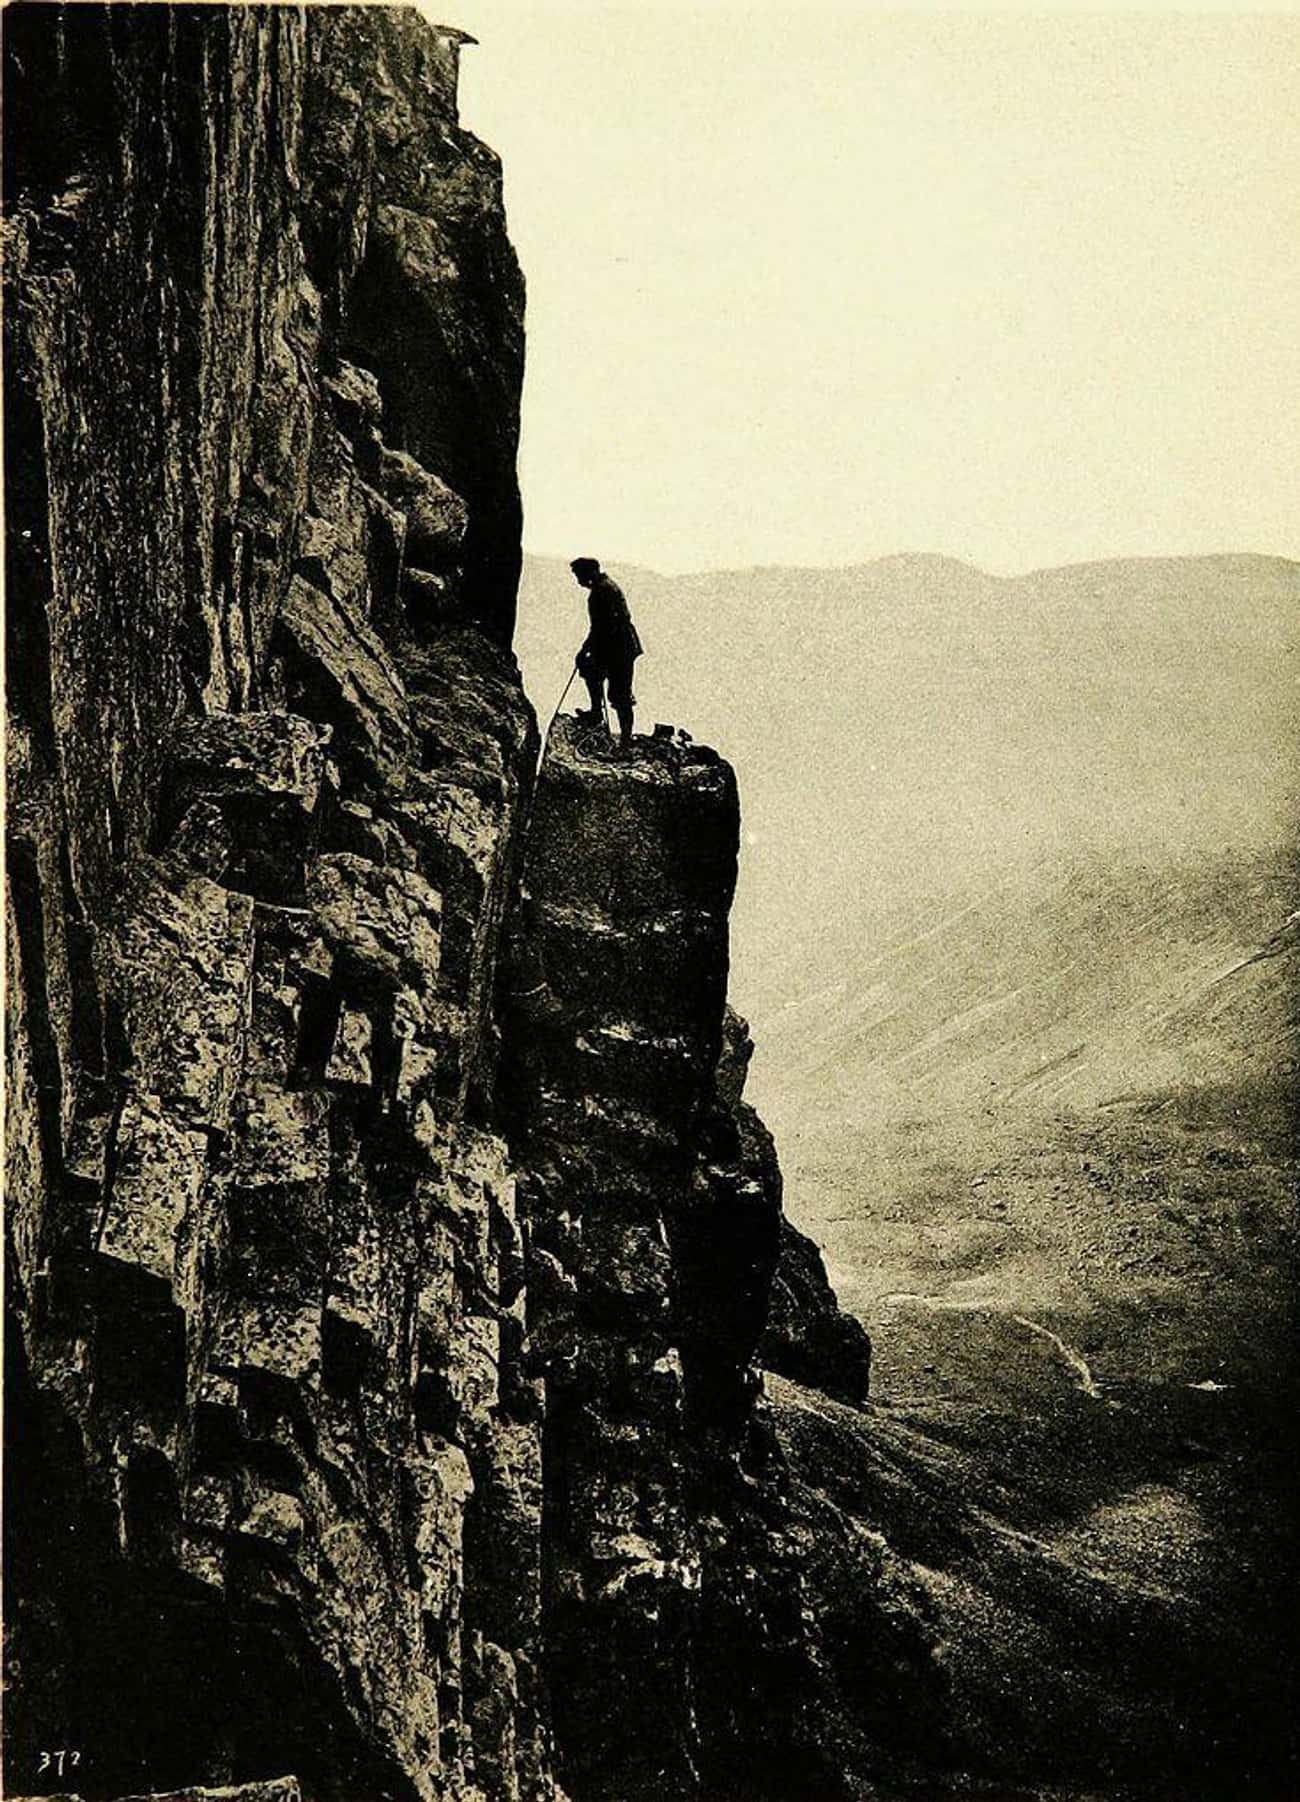 Rock Climbing In The English Lake District, 1900